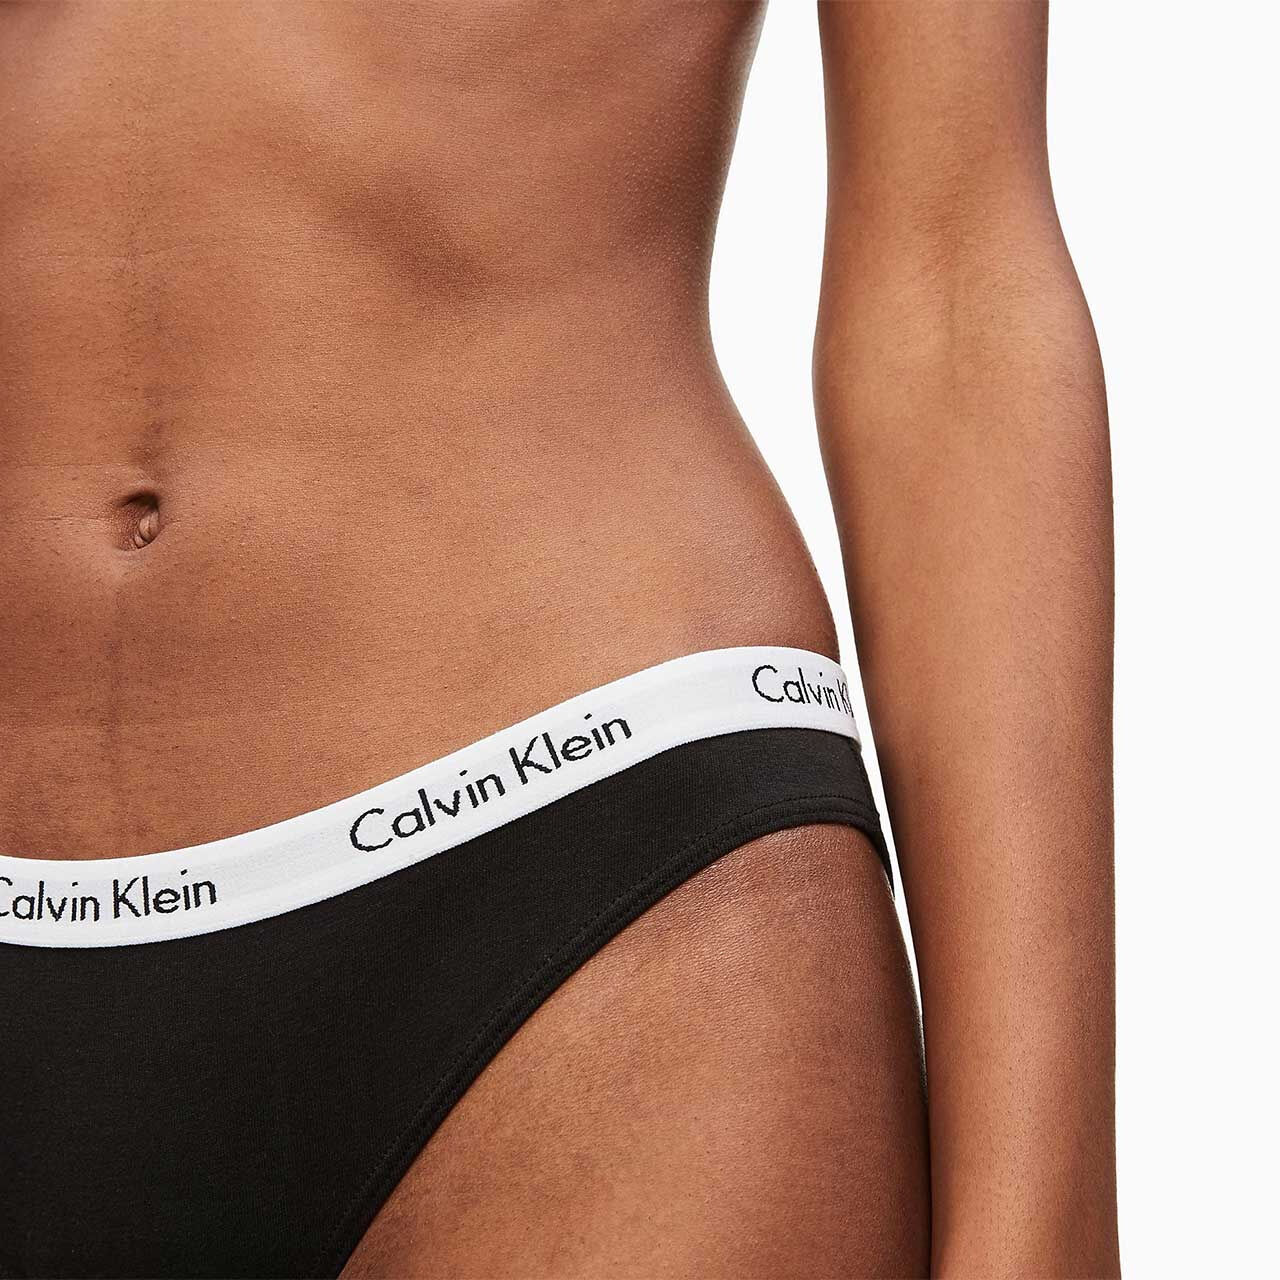 CALVIN KLEIN Sada 3 ks – Nohavičky Bikini Carousel – S